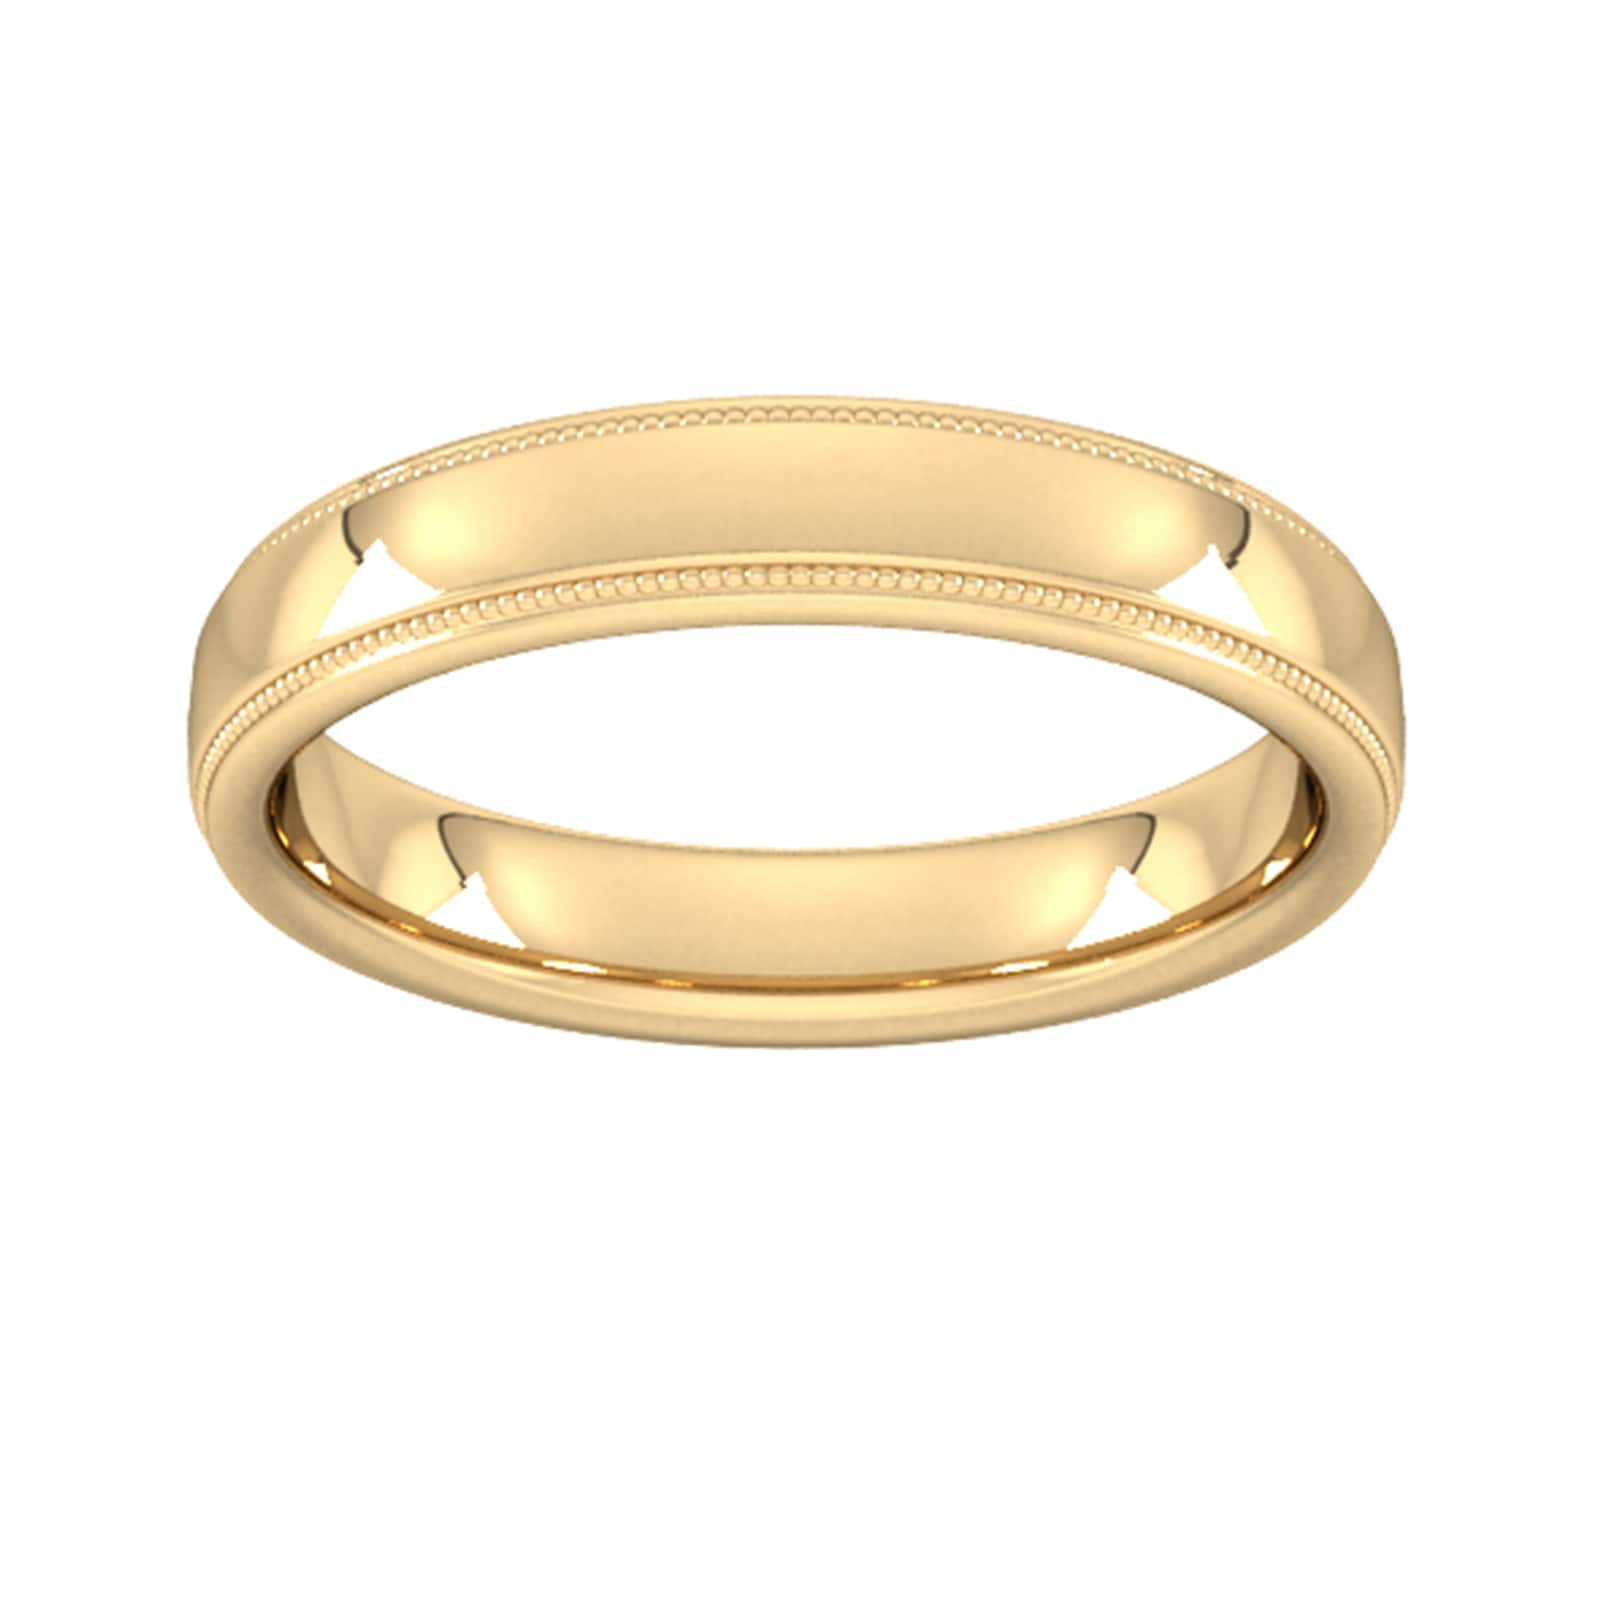 4mm Slight Court Heavy Milgrain Edge Wedding Ring In 9 Carat Yellow Gold - Ring Size R